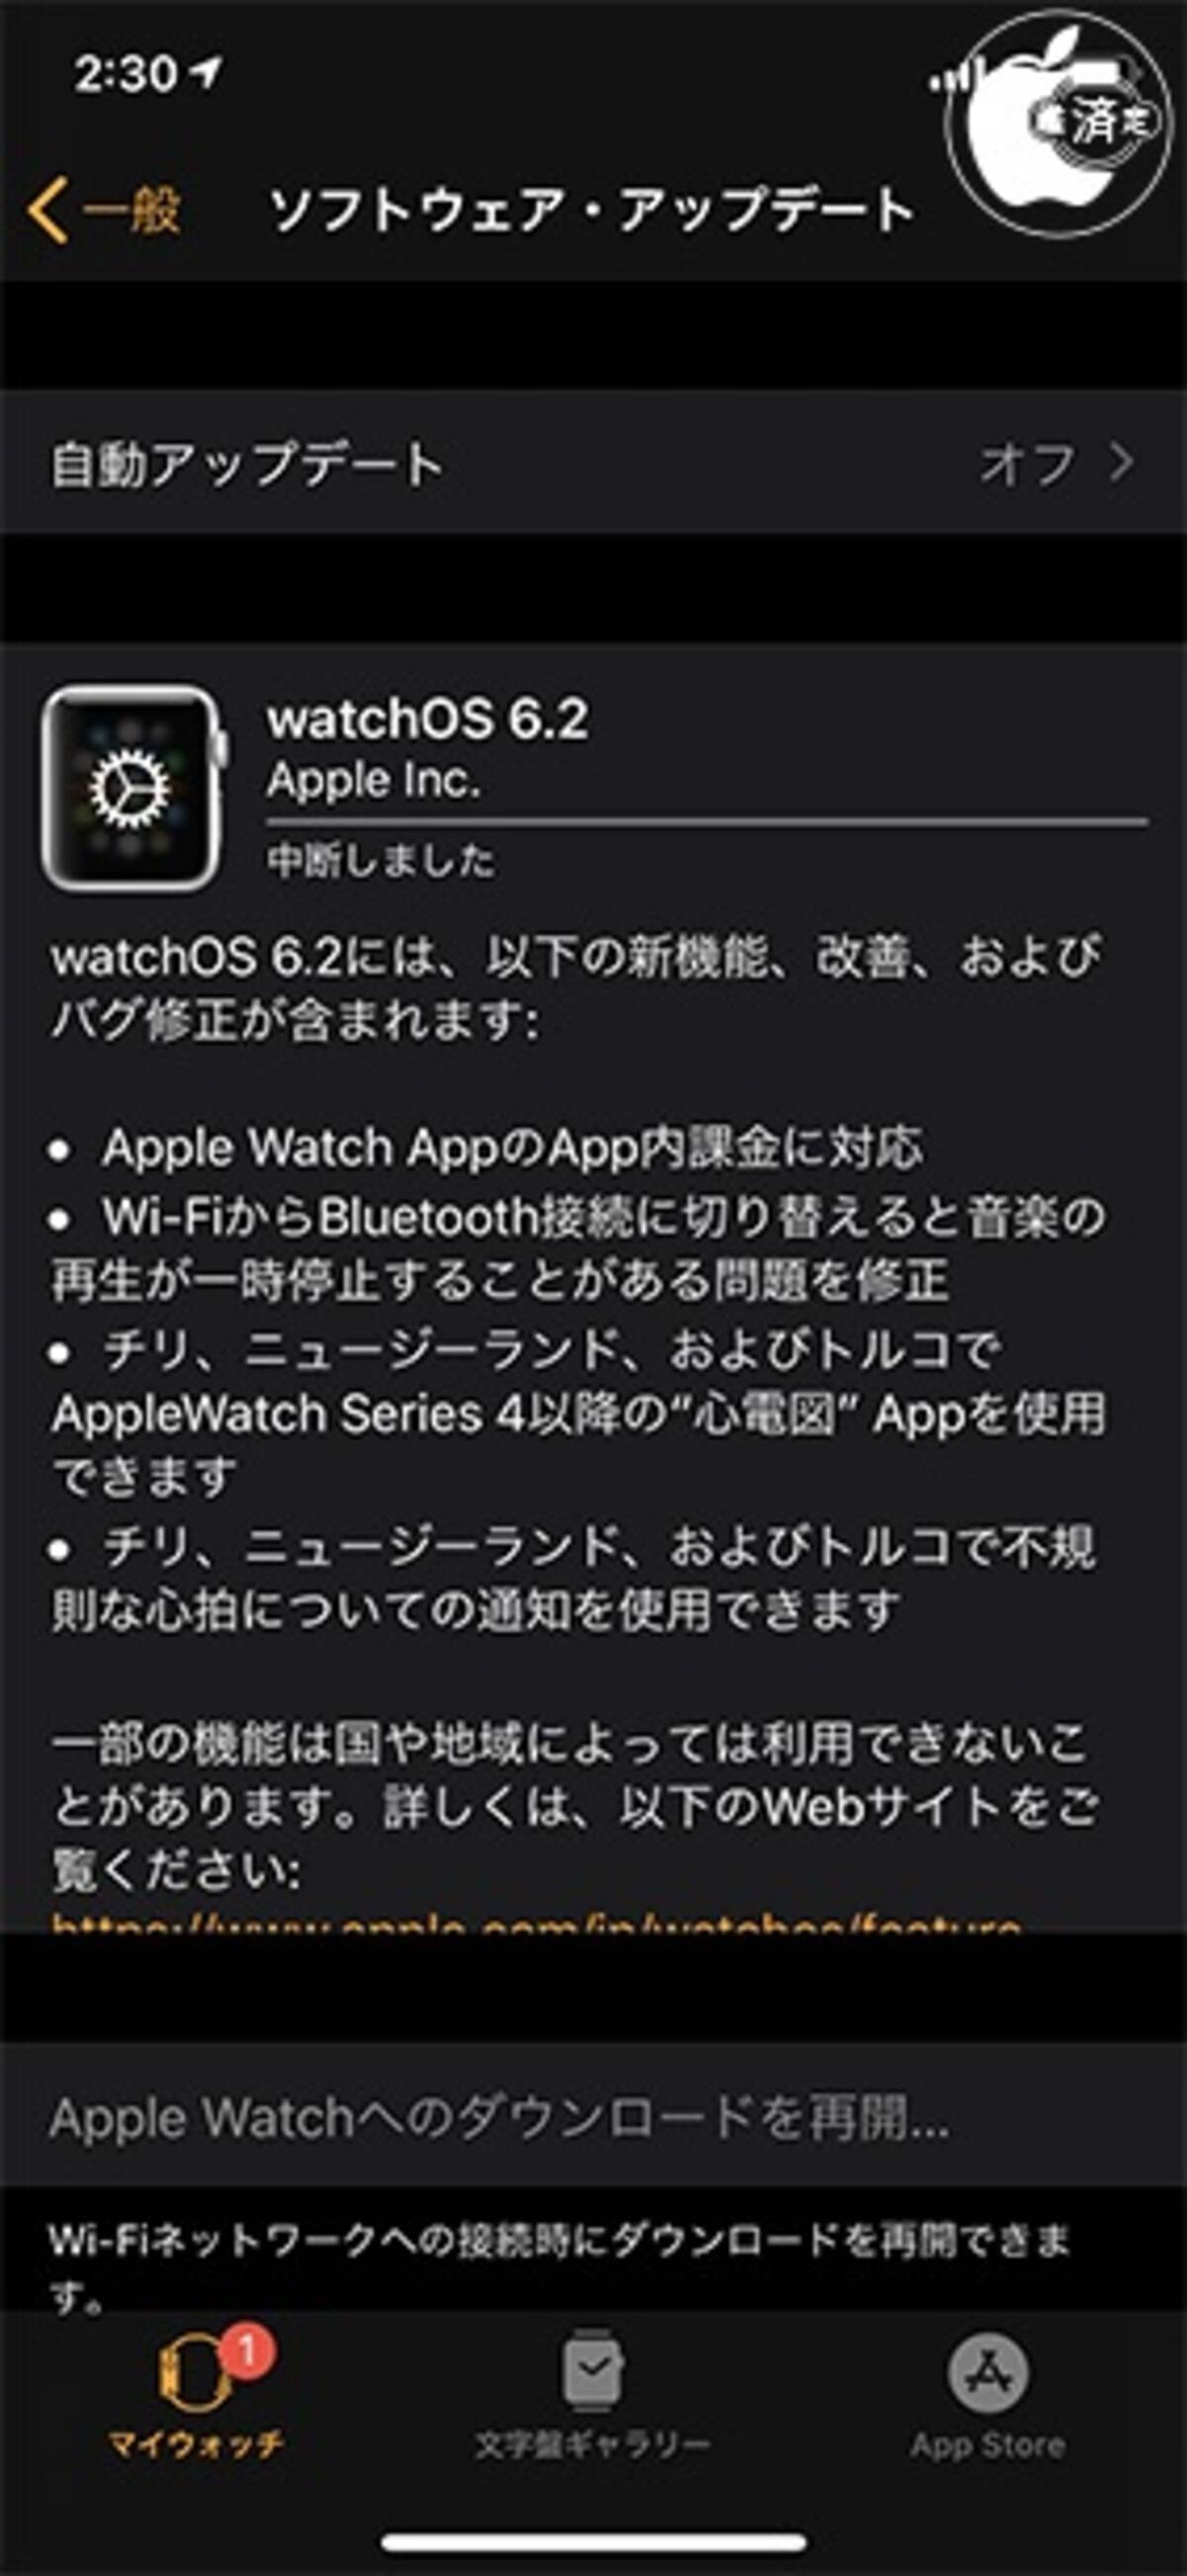 Apple Apple Watch Appのapp内課金に対応した Watchos 6 2 を配布